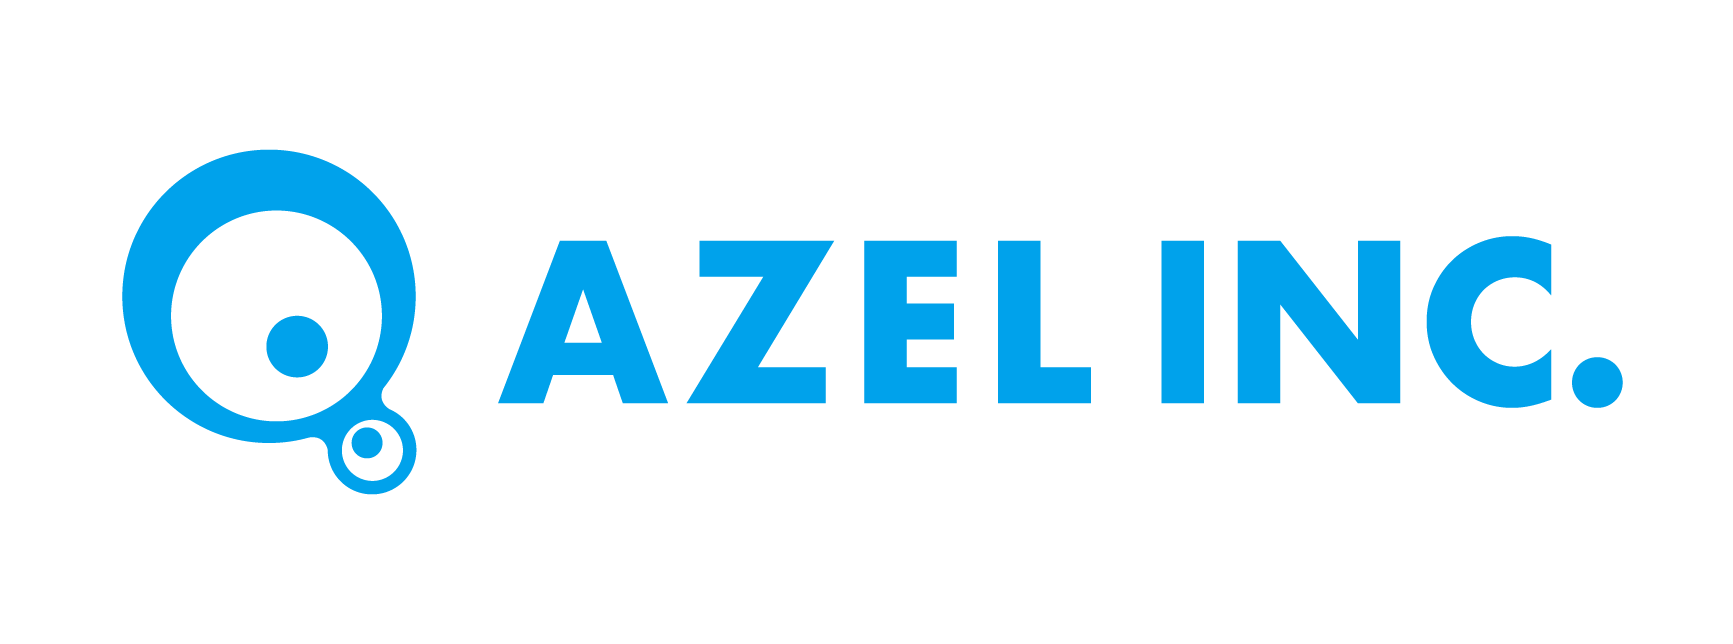 株式会社AZEL